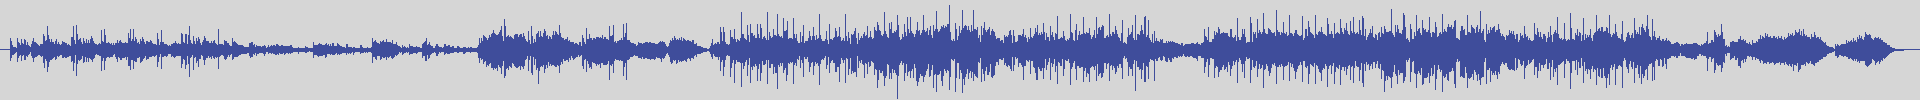 digiphonic_records [DPR003] Nino D'Angelo - Scurdammece [Original Mix] audio wave form